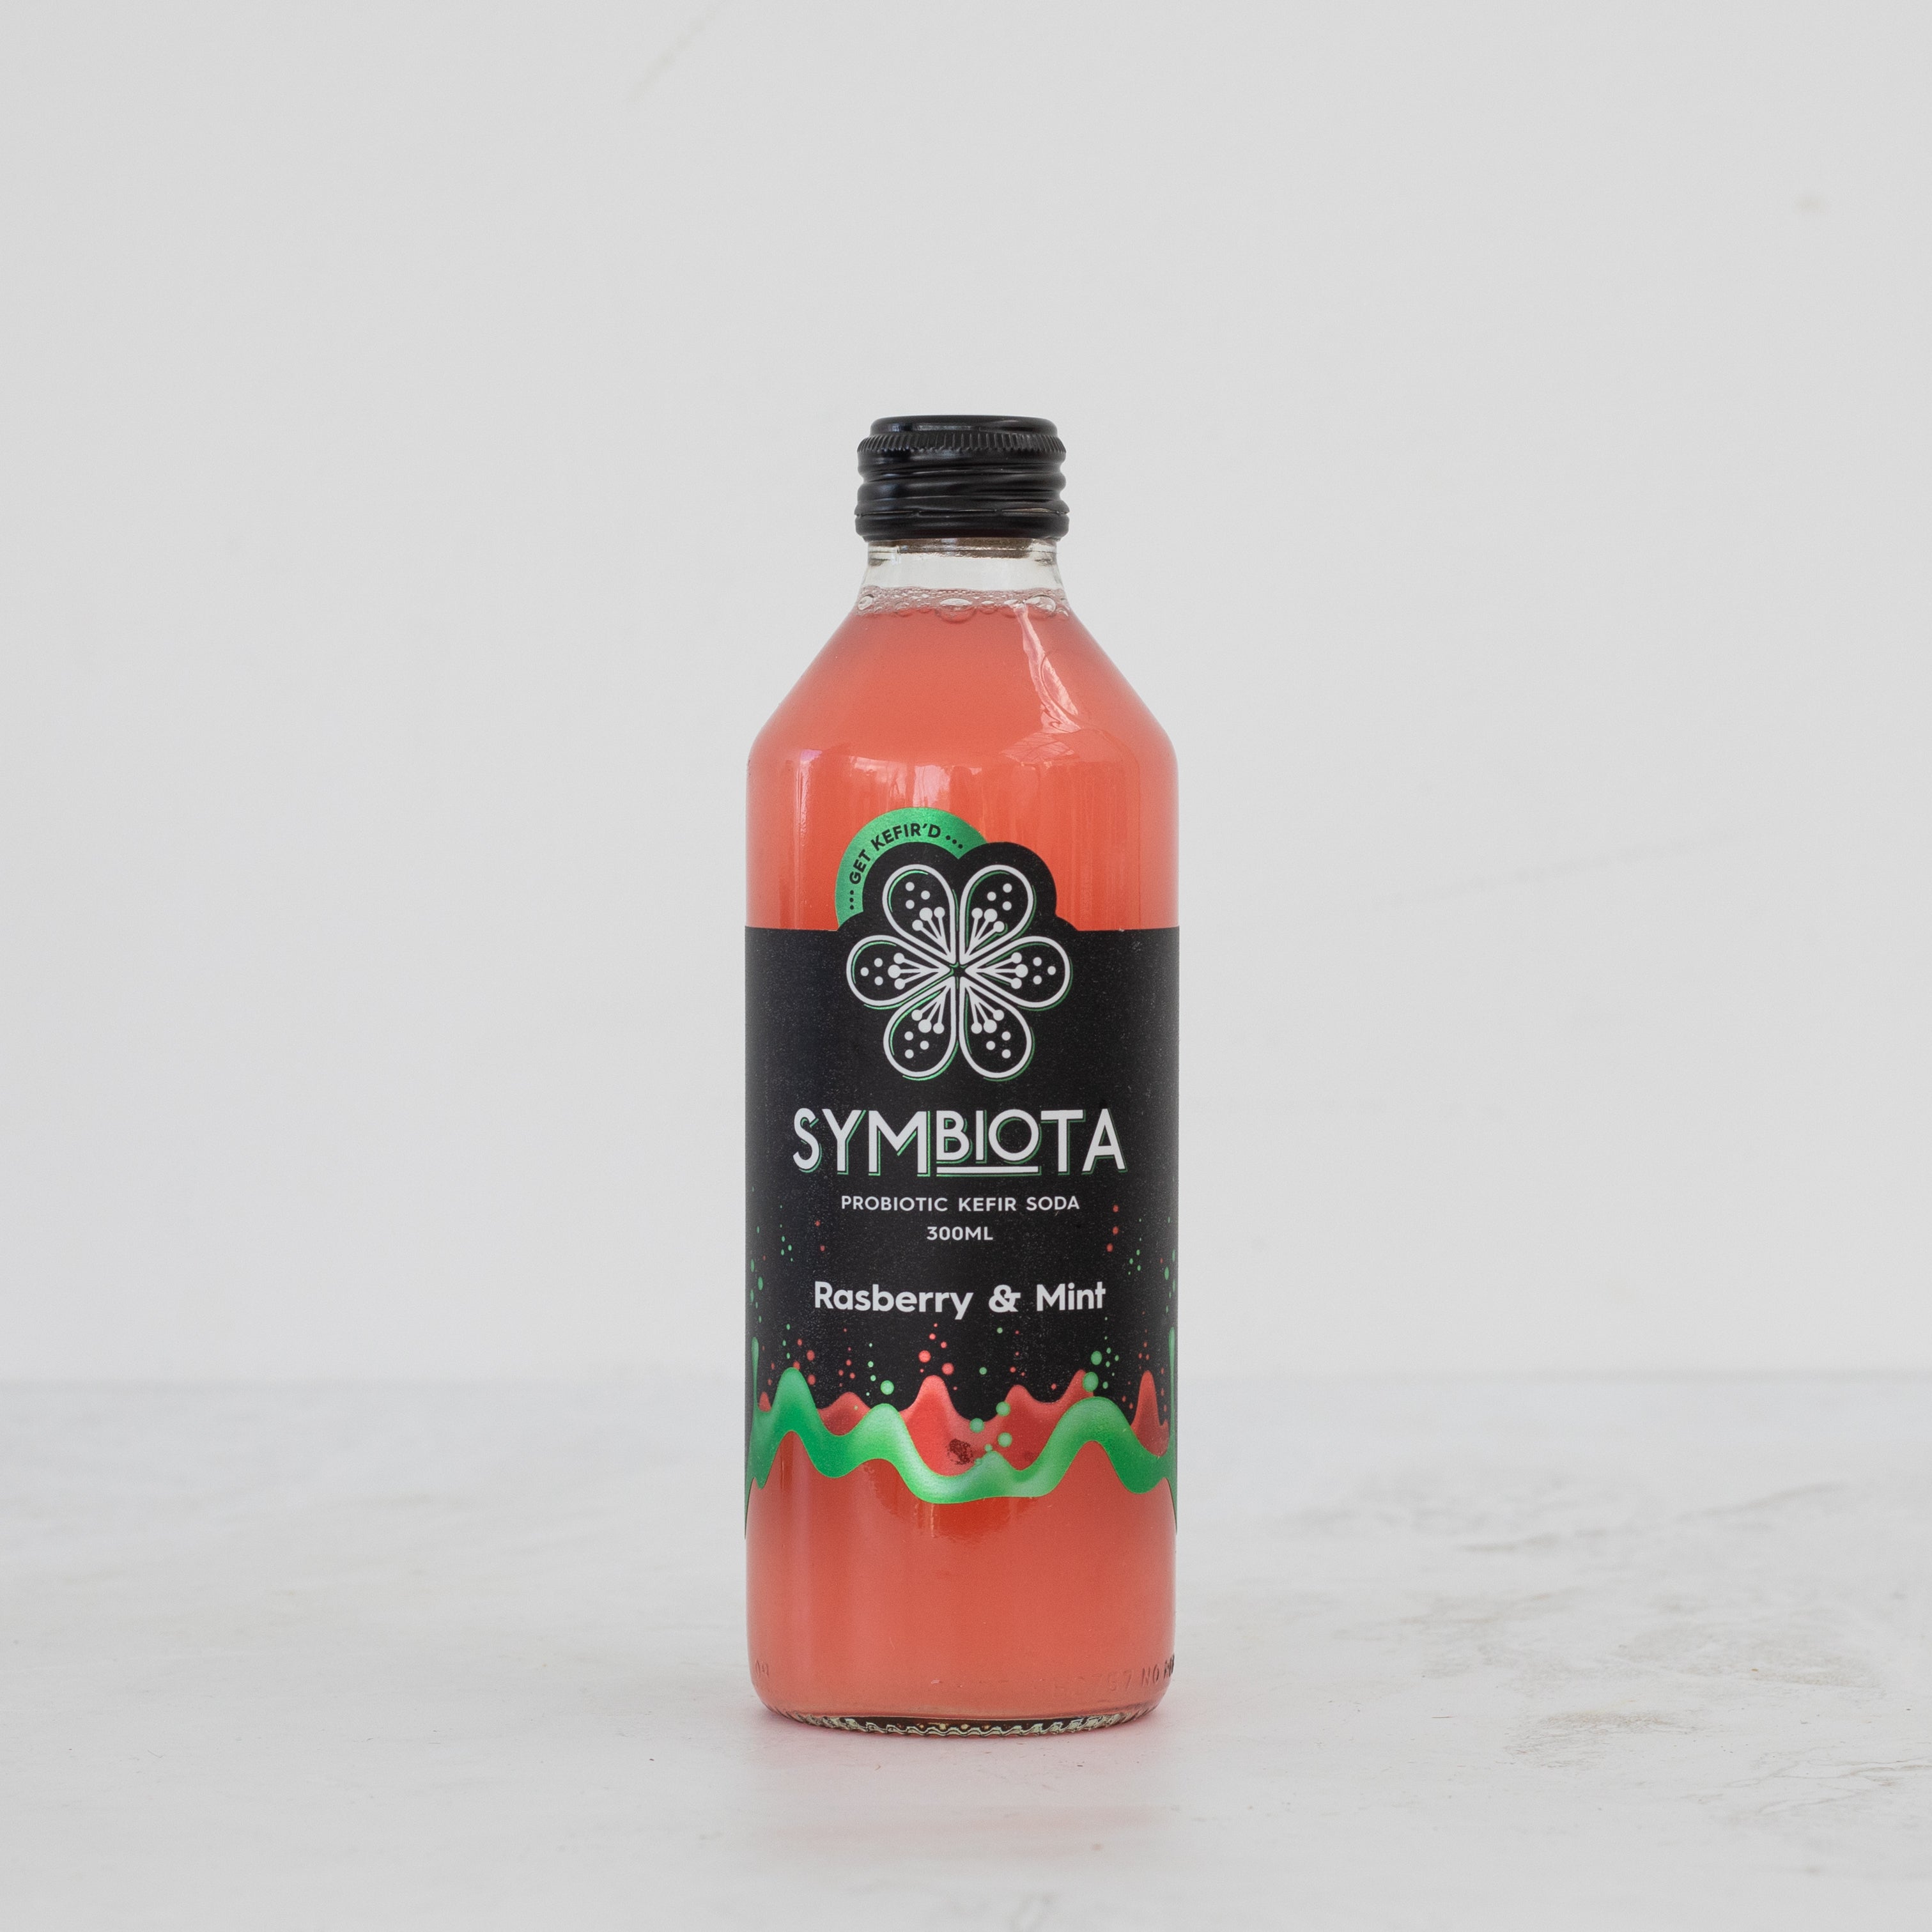 bottle of raspberry mint kefir soda by symbiota